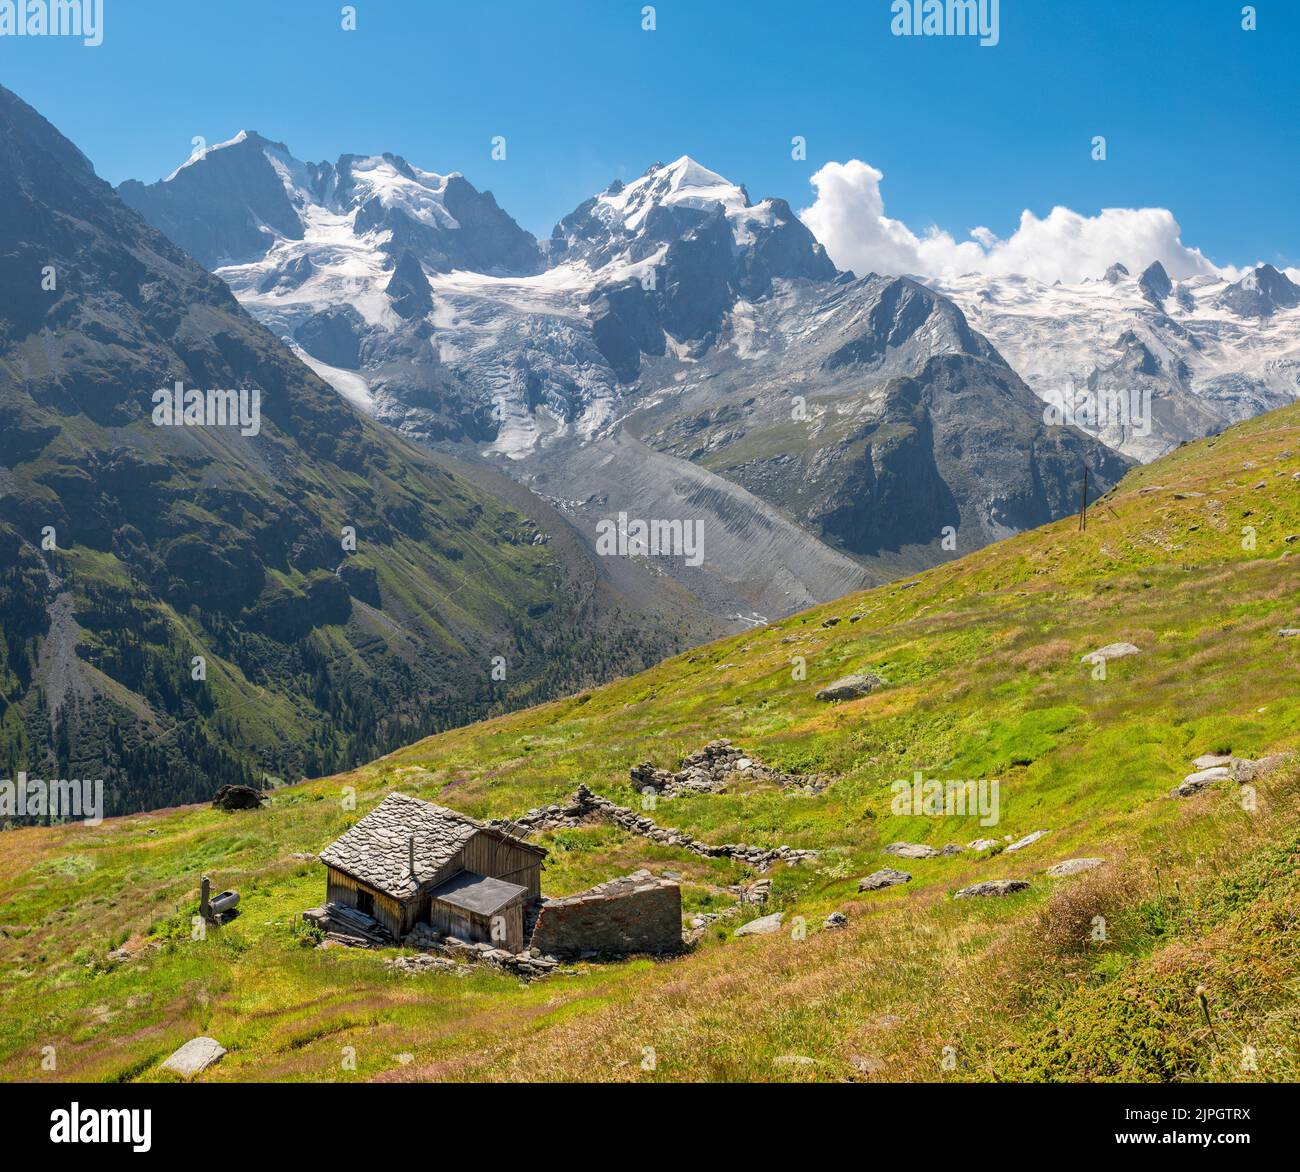 The Piz Bernina and Piz Roseg peaks over the alps meadows. Stock Photo